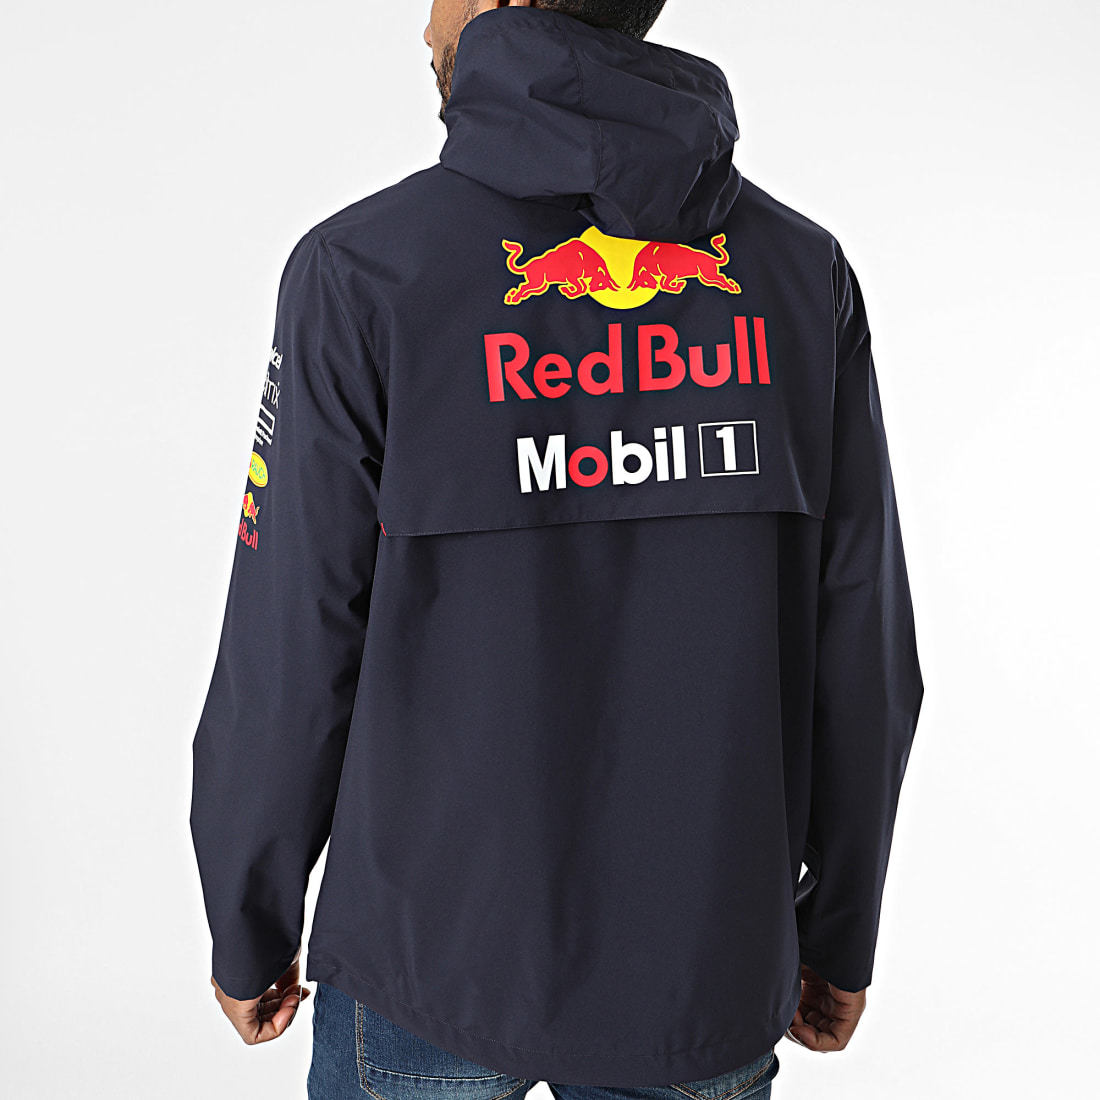 Red Bull Racing Bonnet tricoté bleu marine/rouge